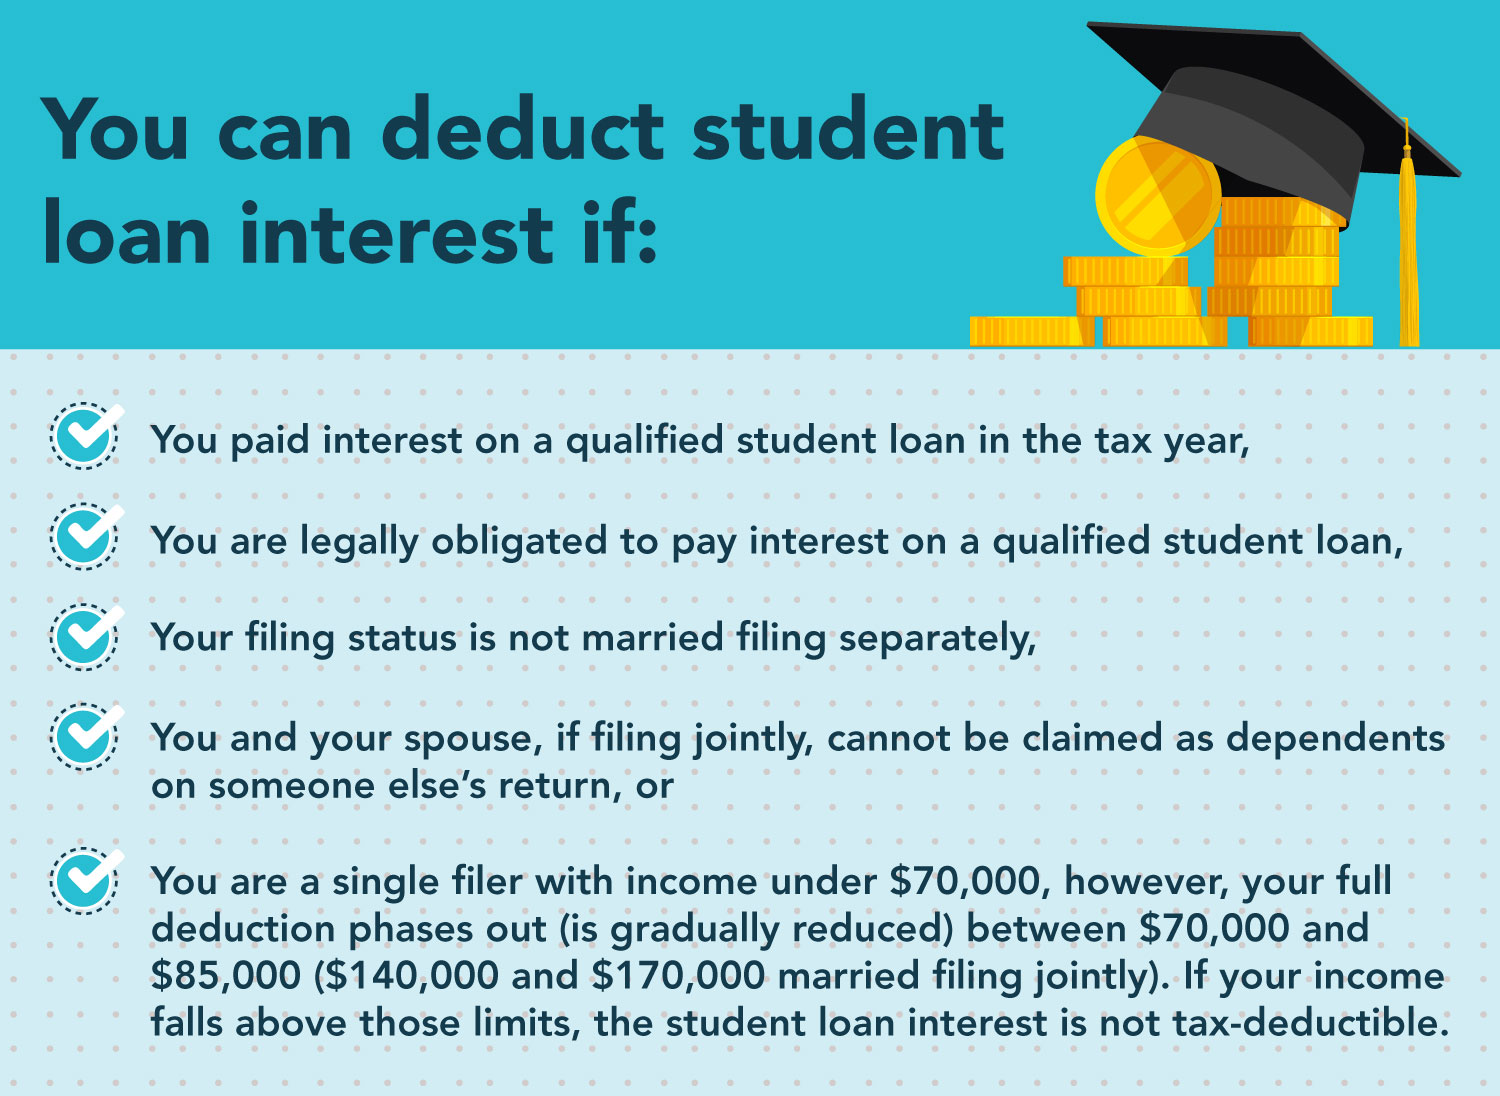 as-student-loan-repayments-resume-hoosier-borrowers-are-feeling-the-impact